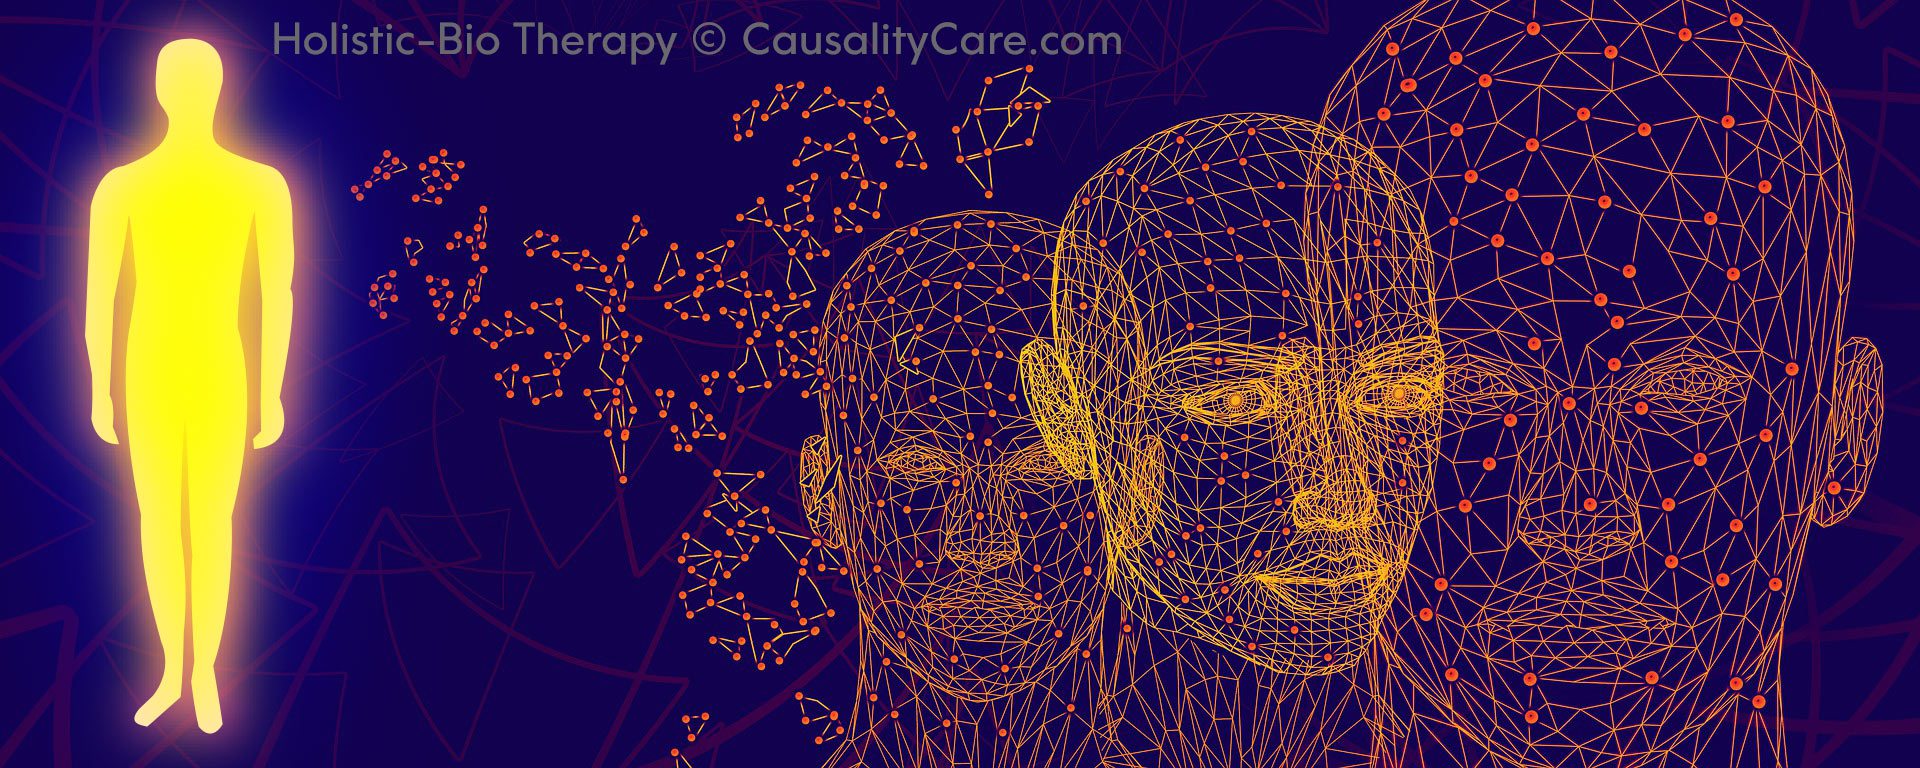 Shak's CausalityCare.com | Holistic-Bio therapy